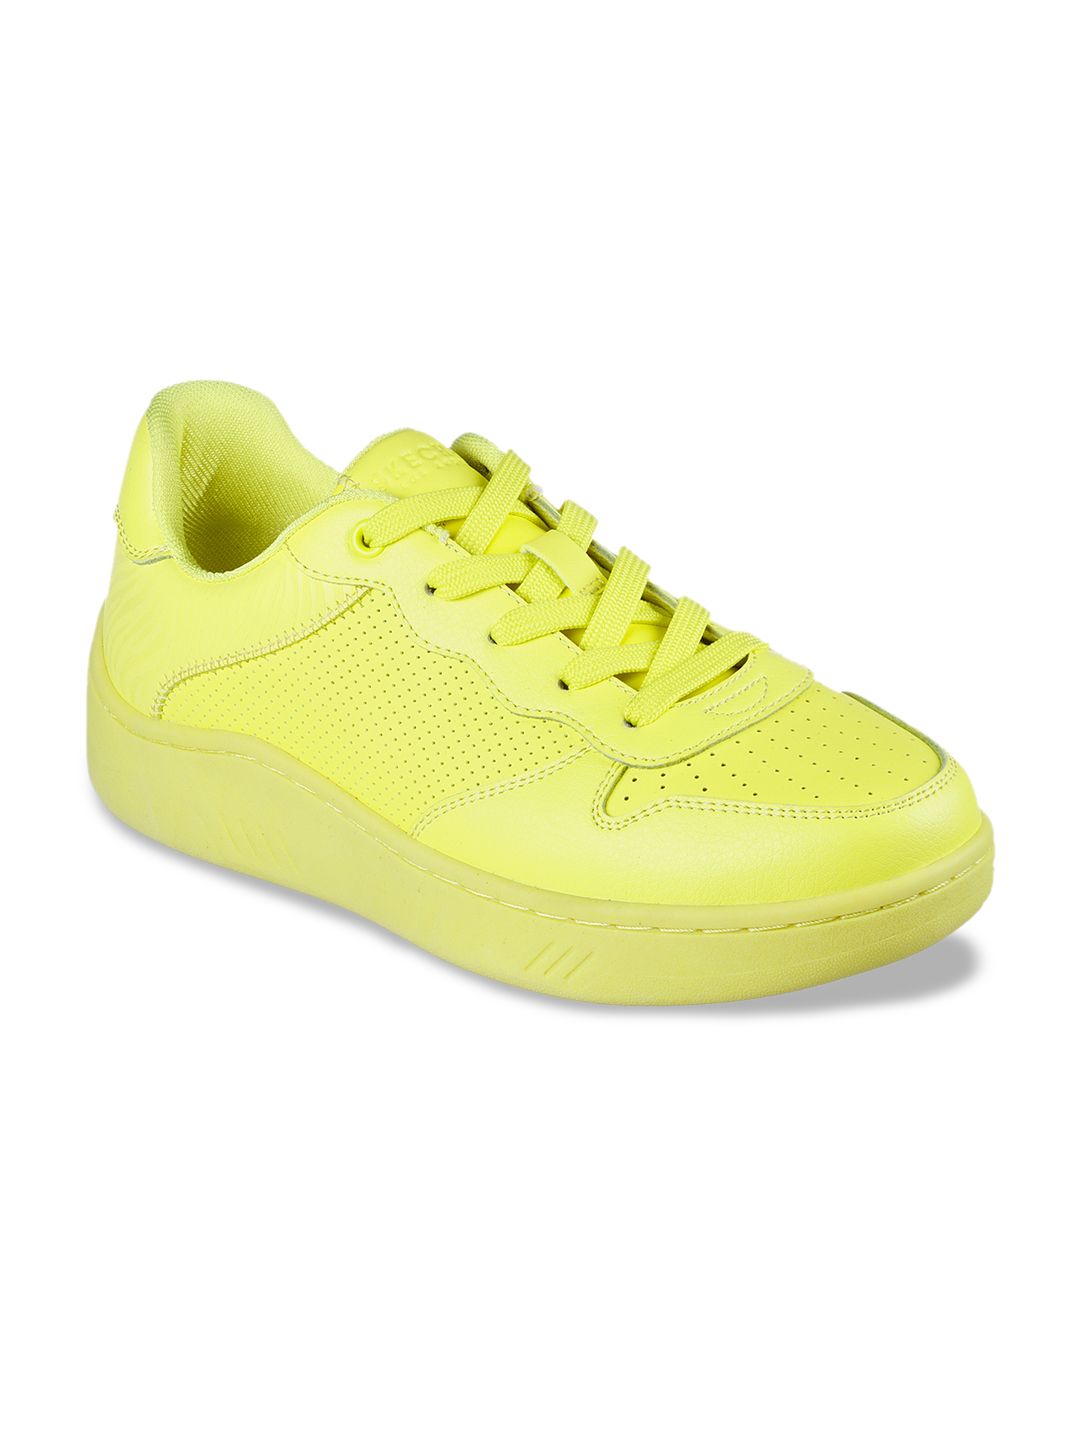 Skechers Women Yellow Solid Mesh Sneakers Price in India